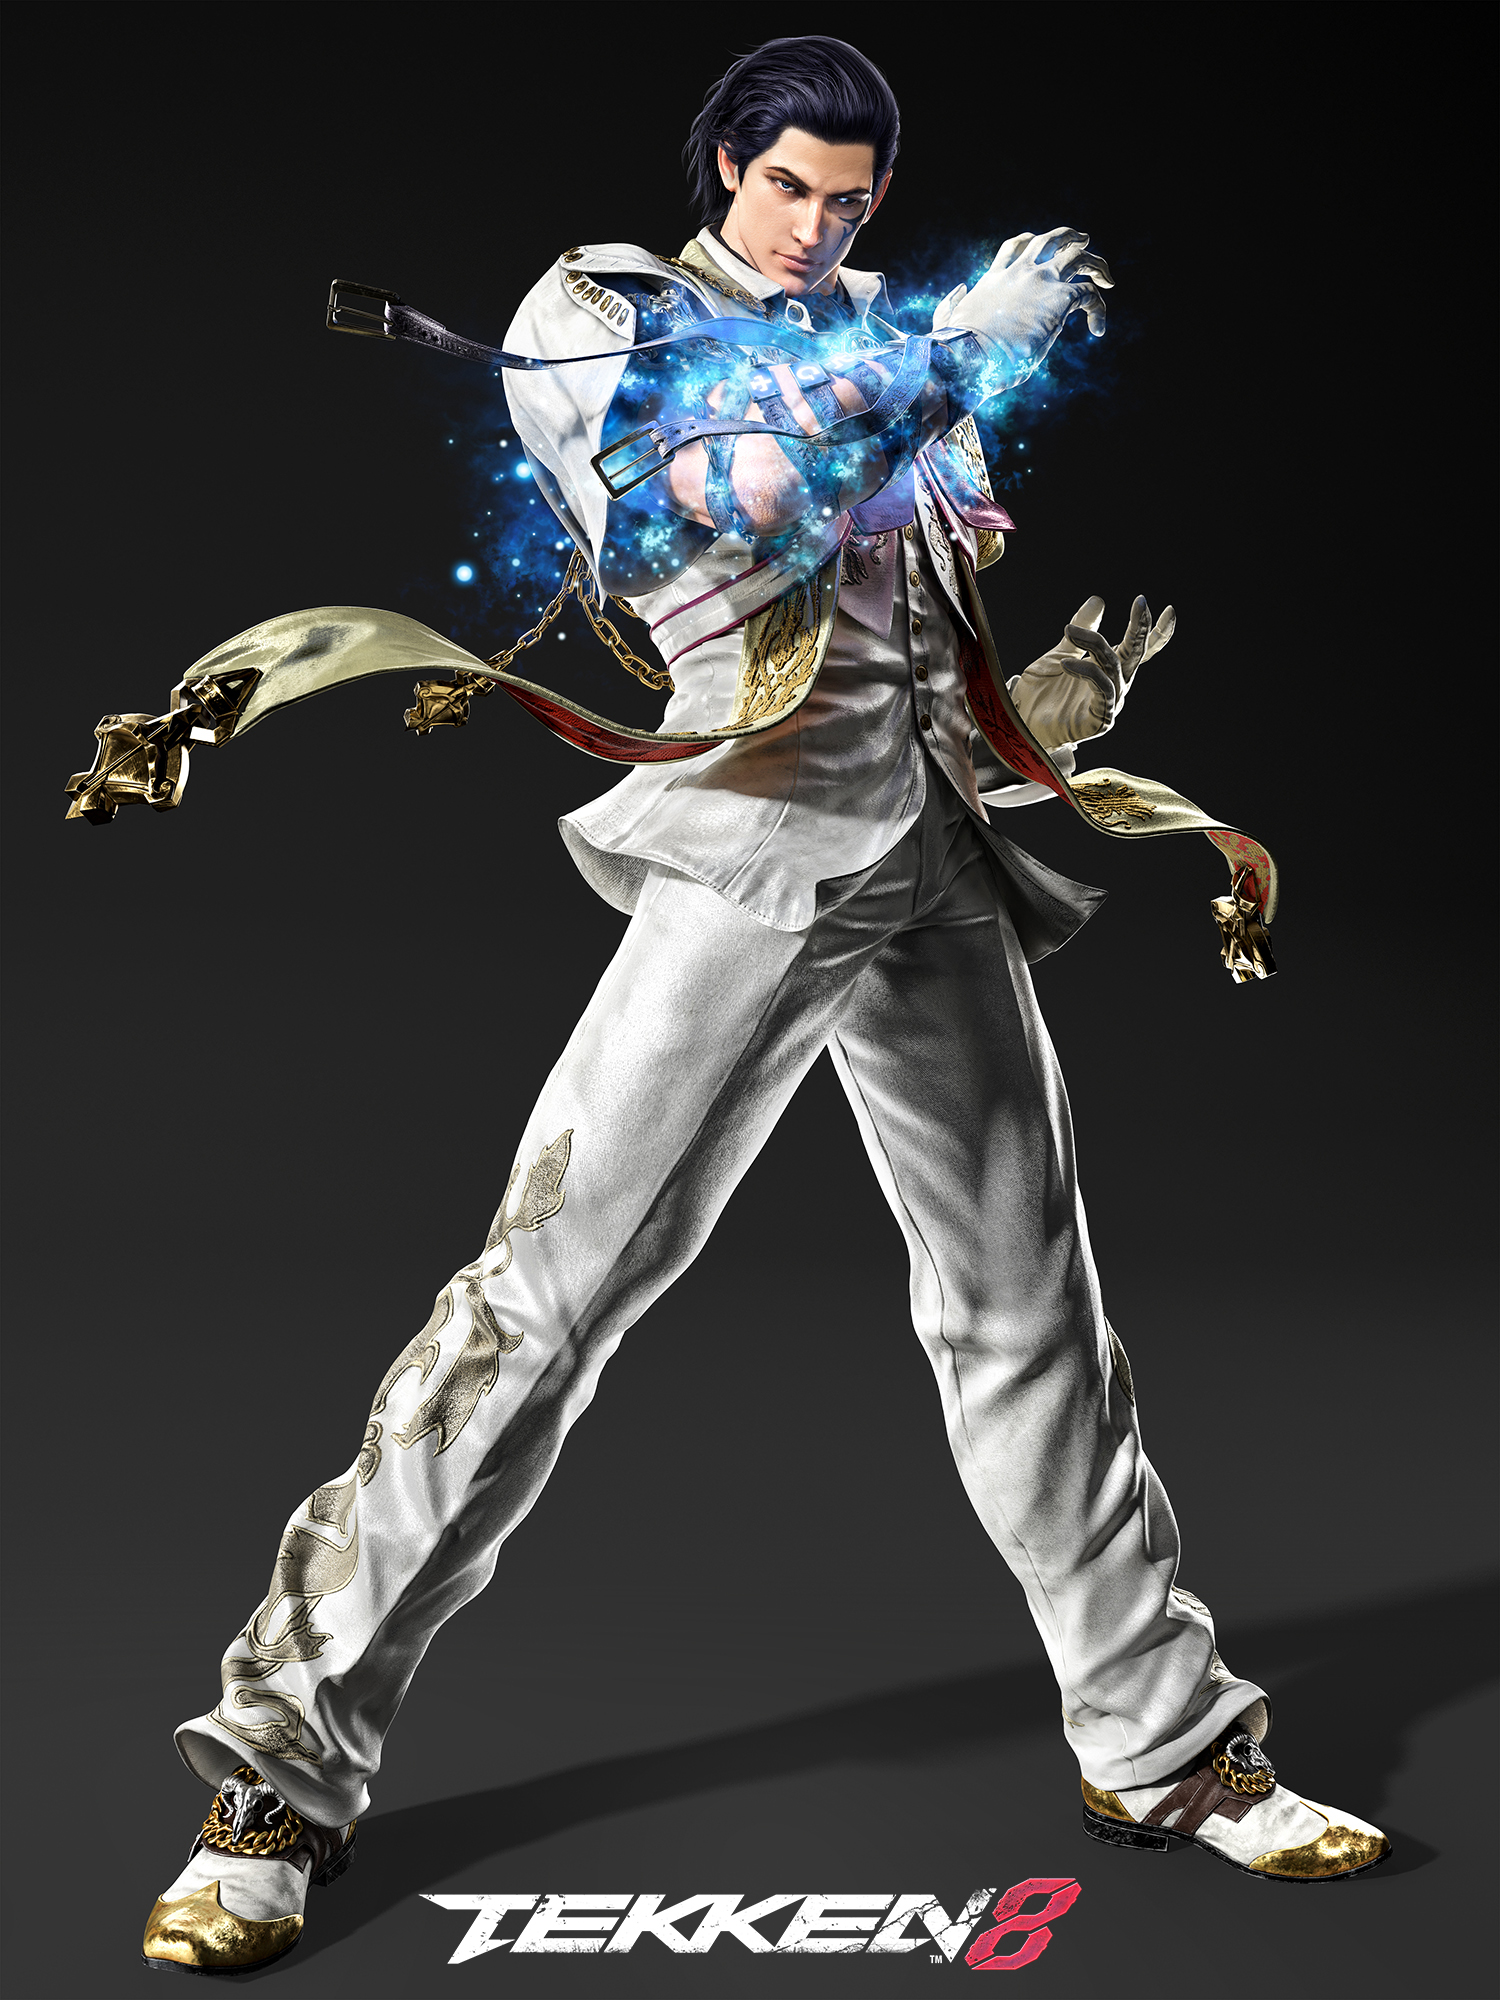 Tekken 8's key art and official character portraits for Jin, Kazuya, Jun,  Jack-8, Law, Lars, Paul and King revealed